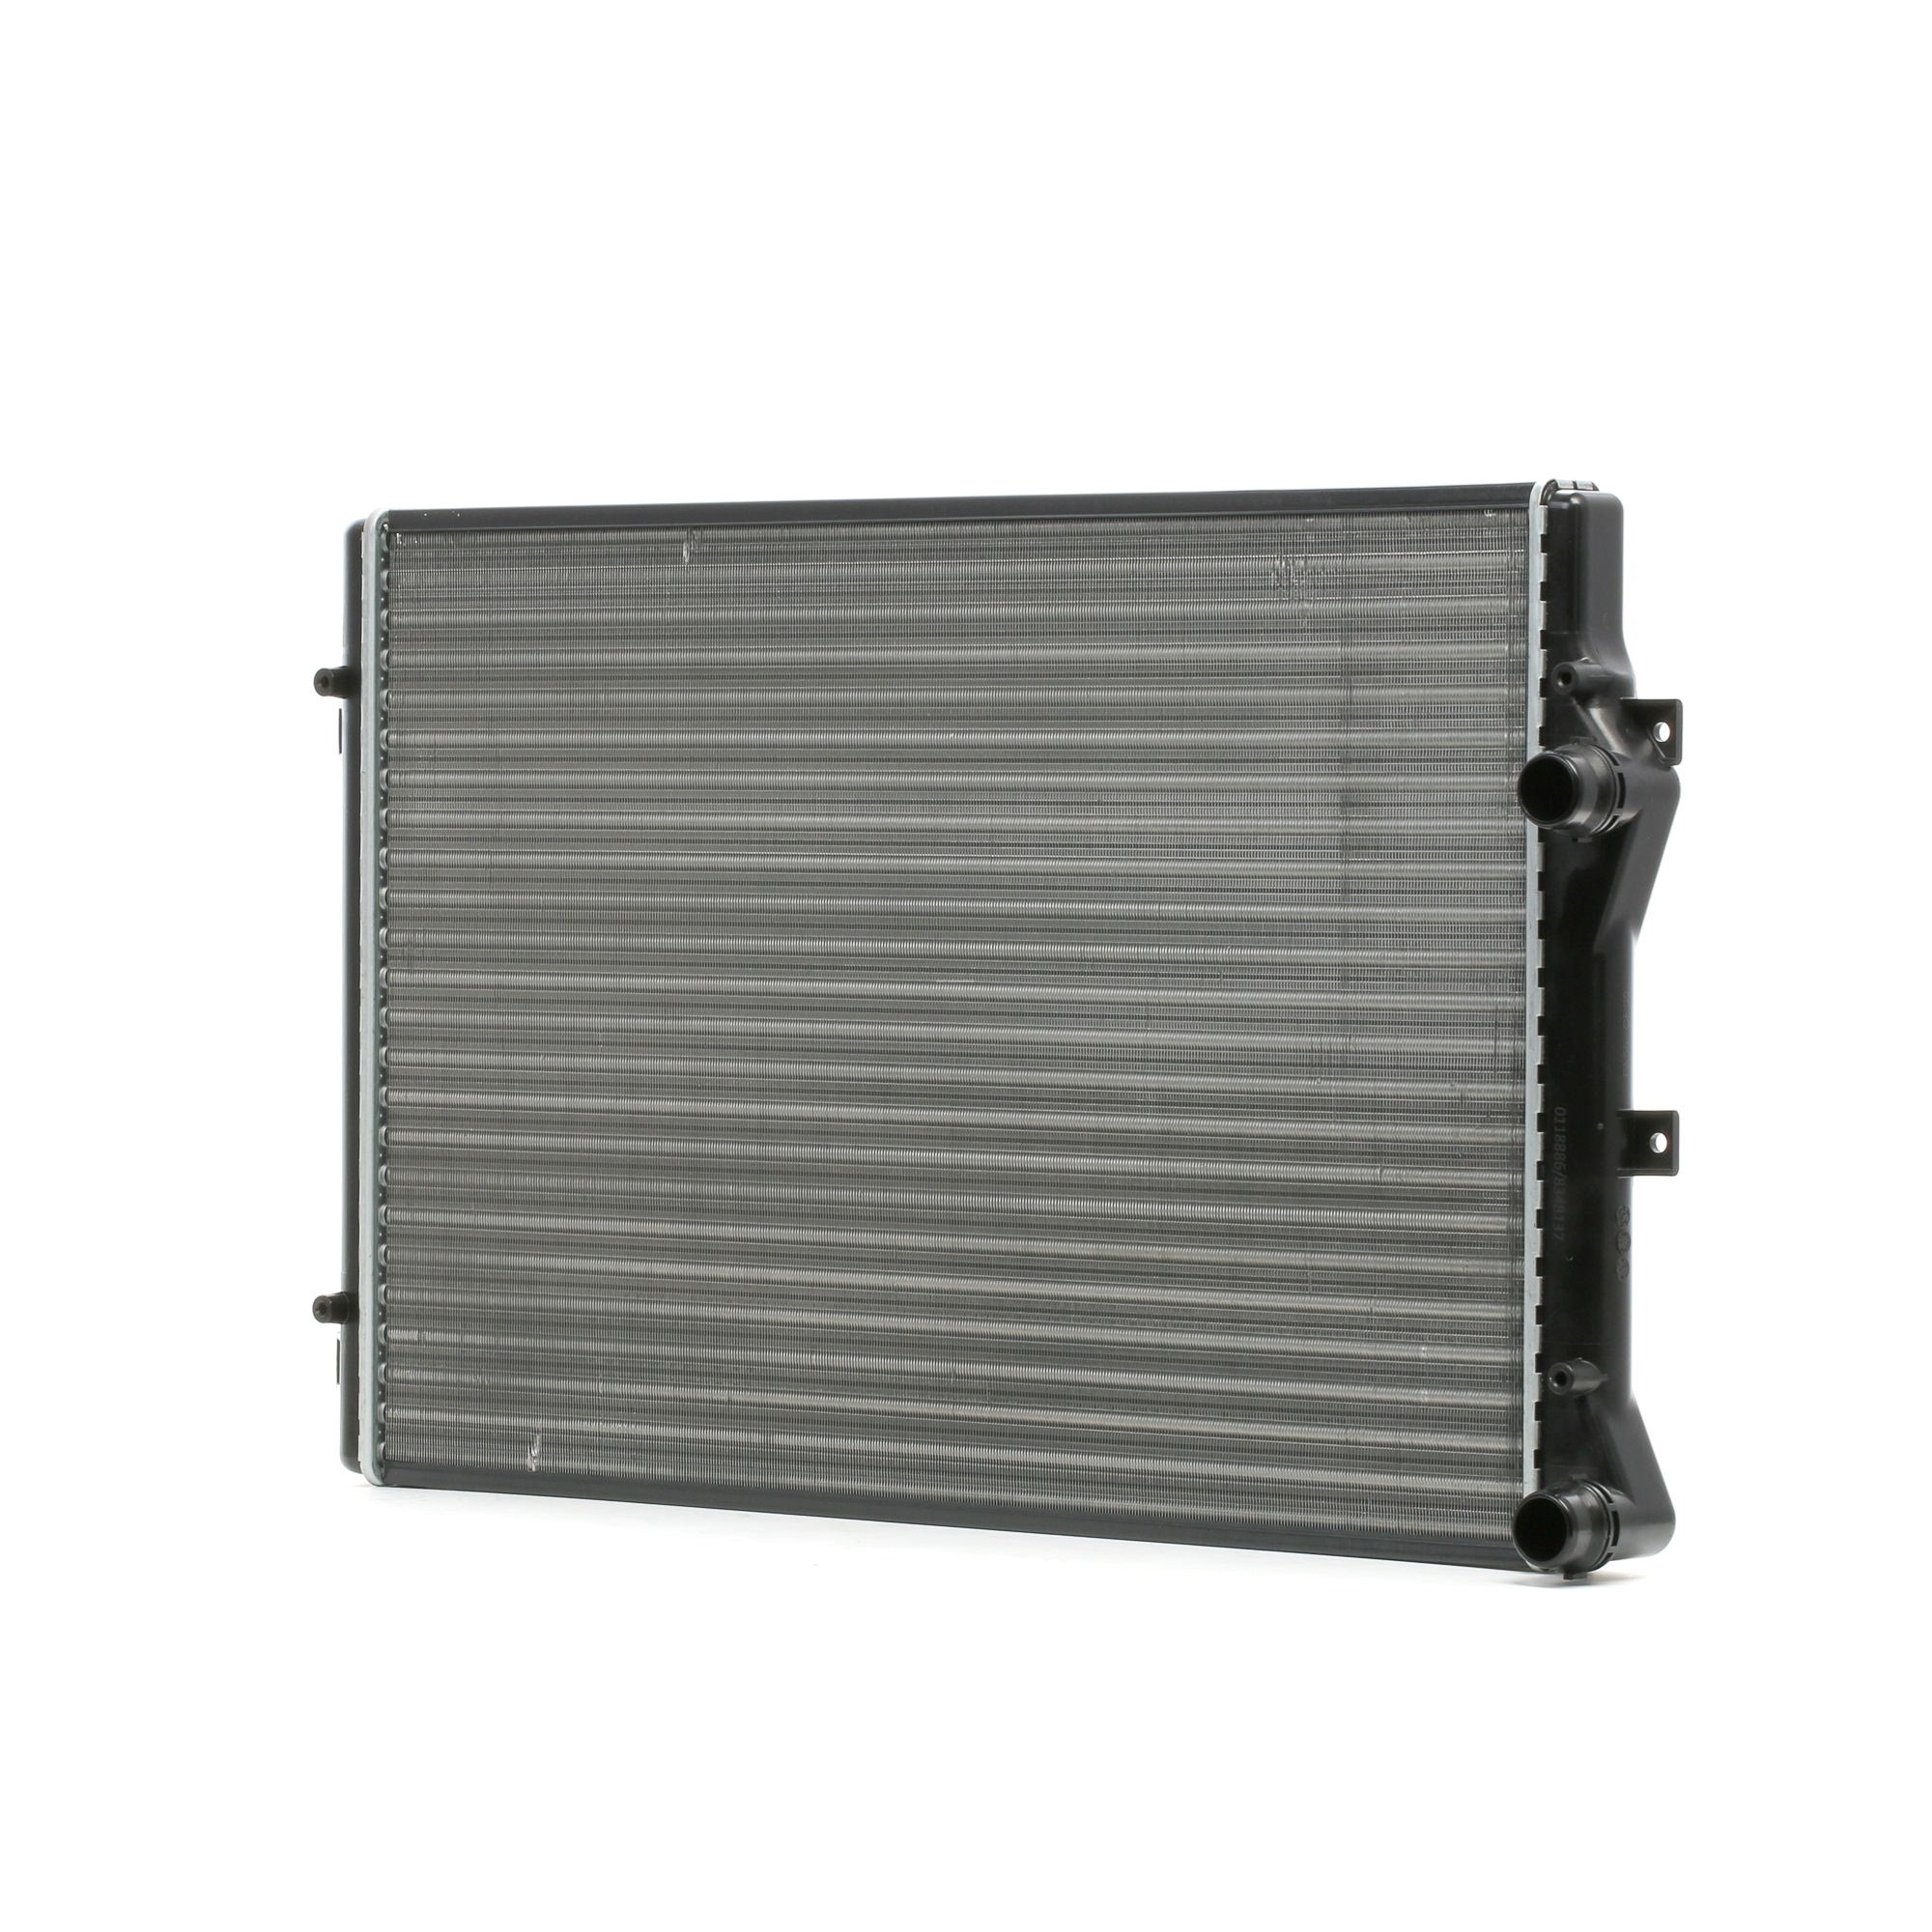 STARK Aluminium x 32 mm, Brazed cooling fins Core Dimensions: 650x452 Radiator SKRD-0120622 buy